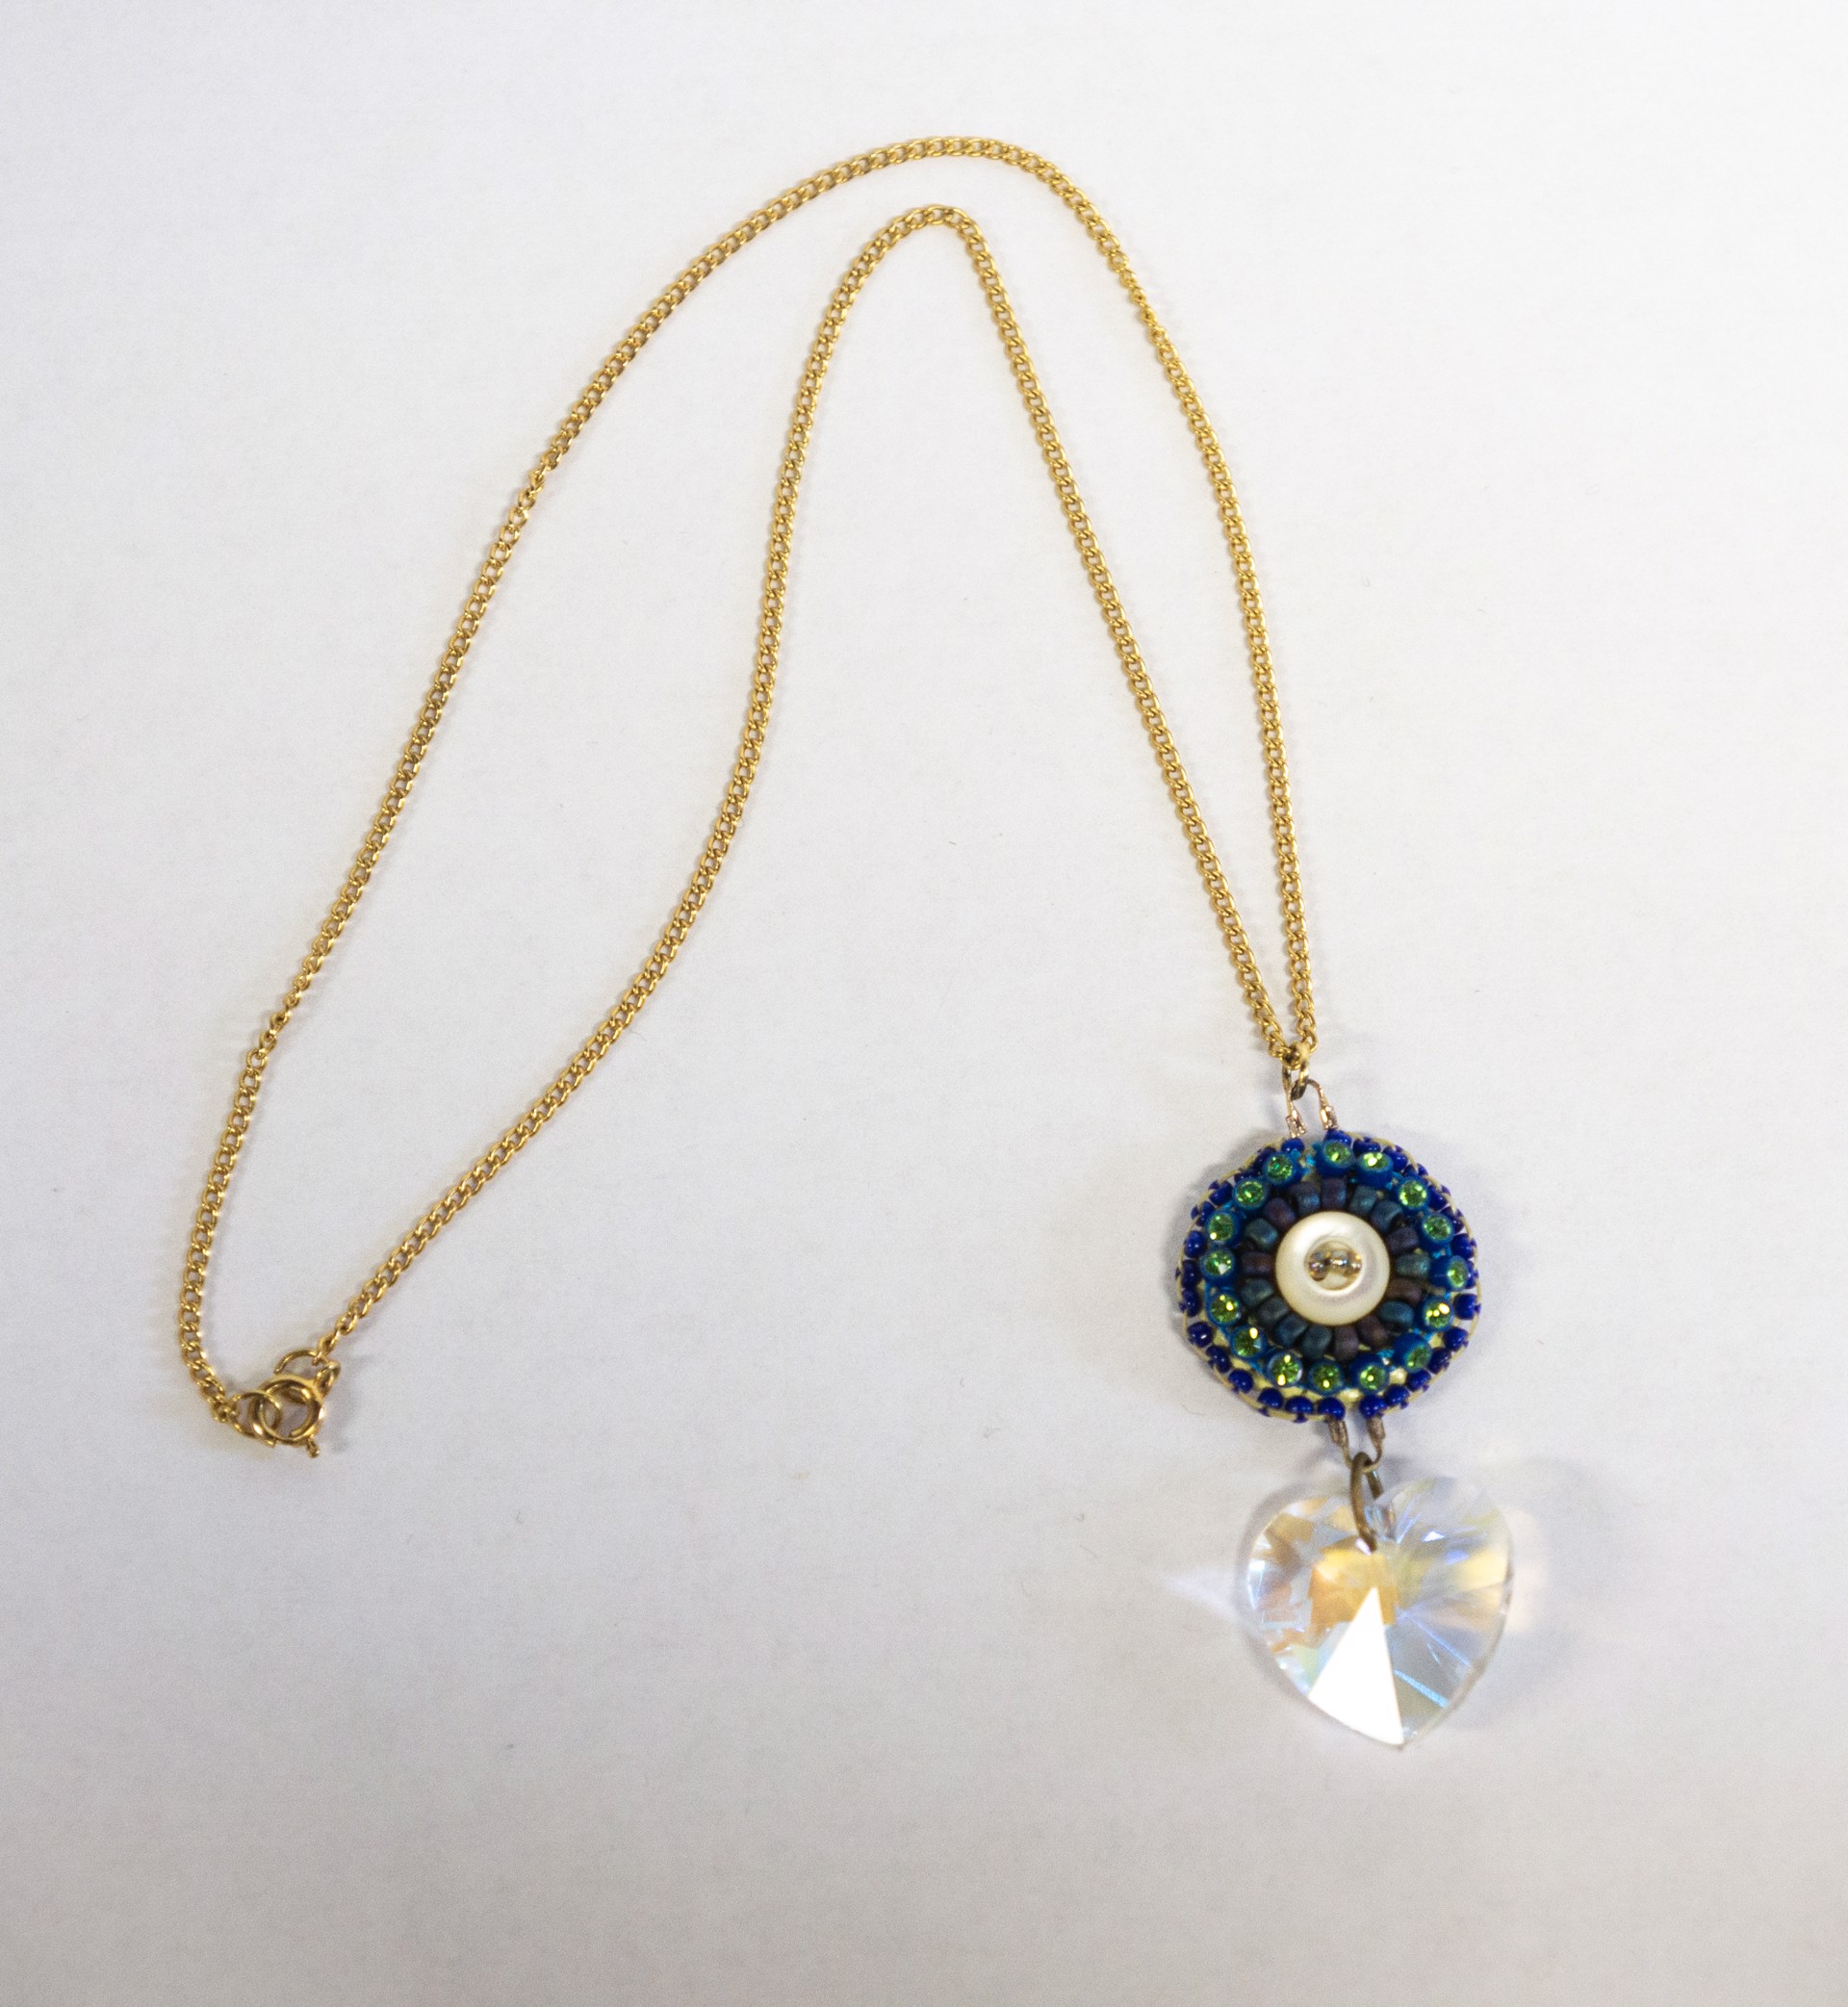 Prism Necklace by Hattie Lee